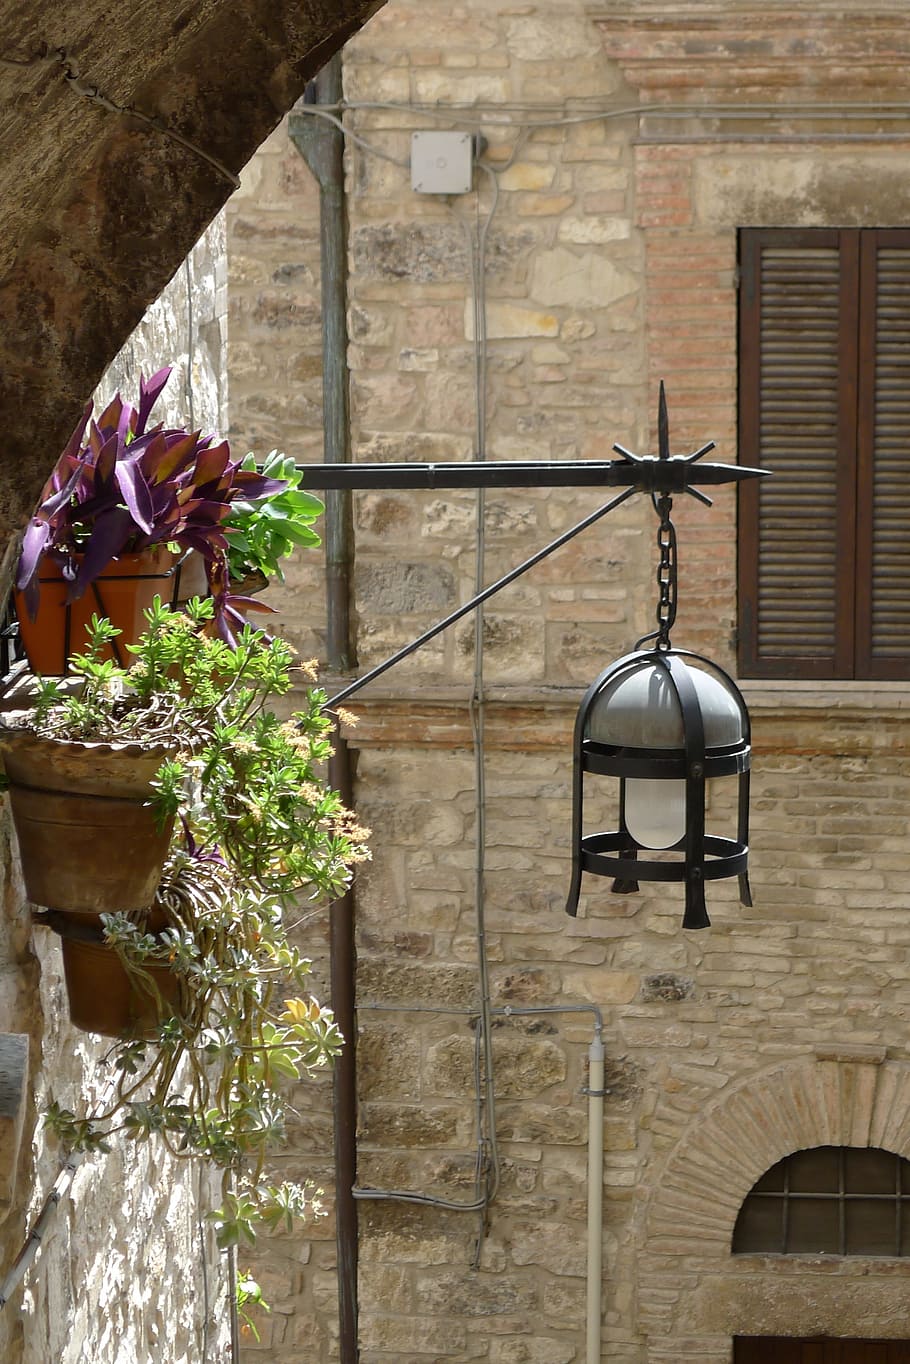 Assisi, Medieval, Lantern, Italy, medieval lantern, architecture, umbria, tourism, historic, brickwall